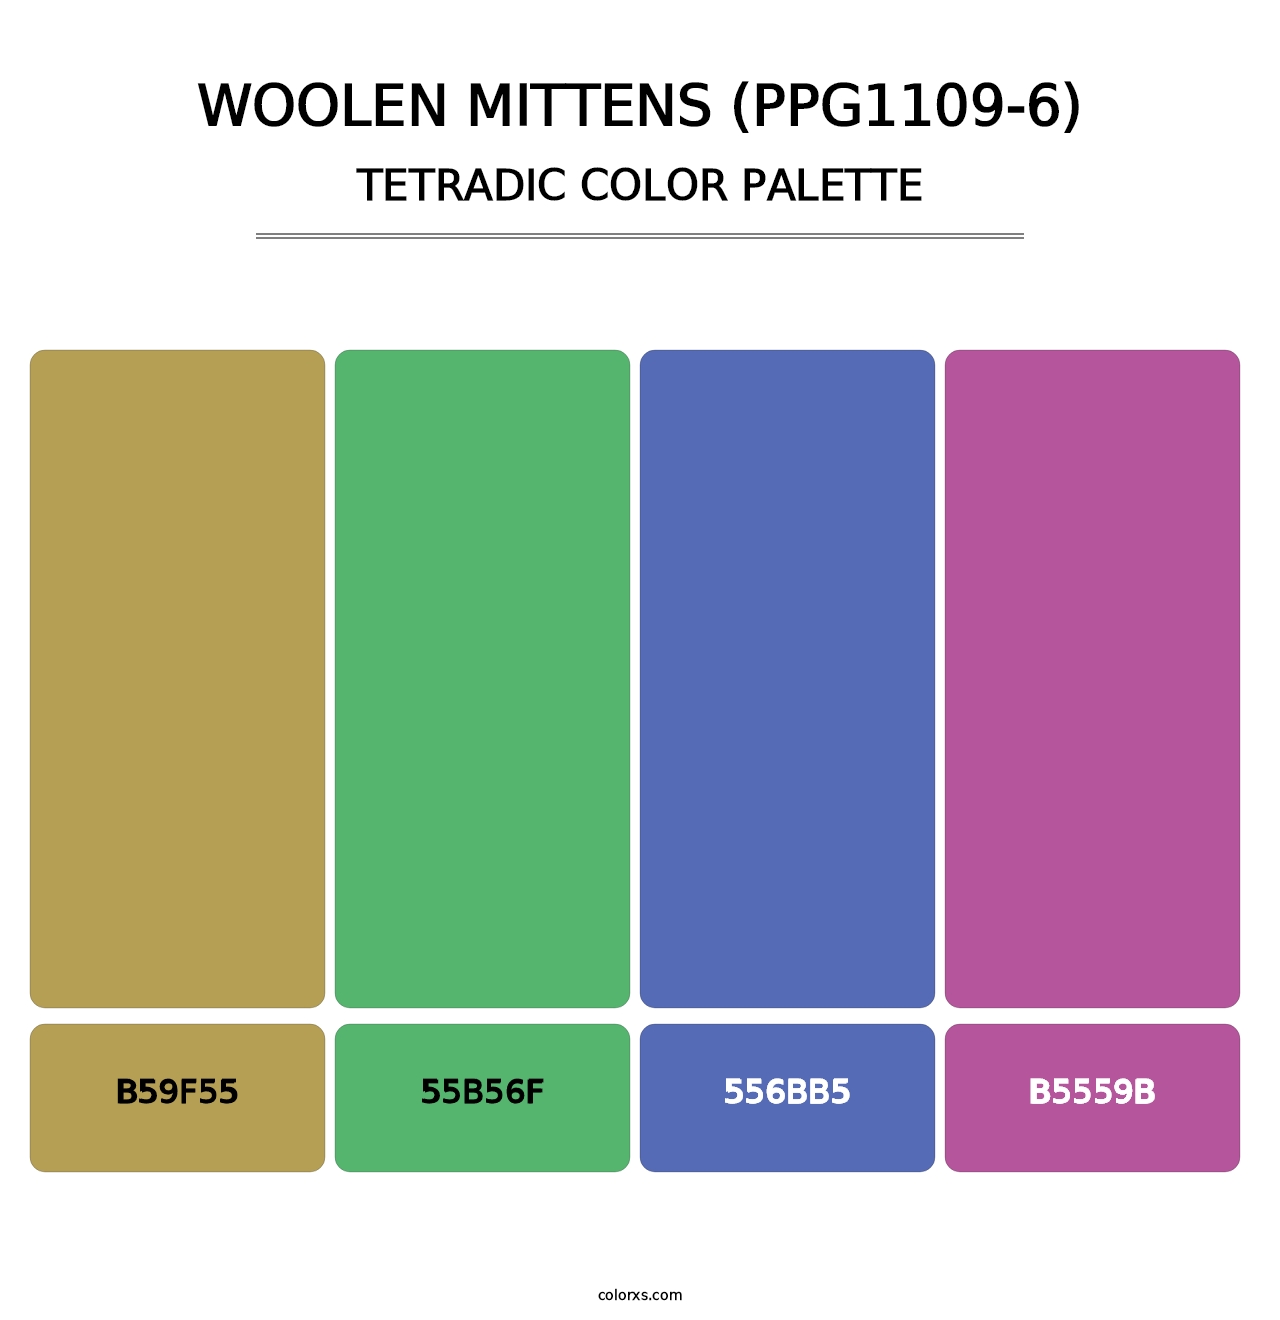 Woolen Mittens (PPG1109-6) - Tetradic Color Palette